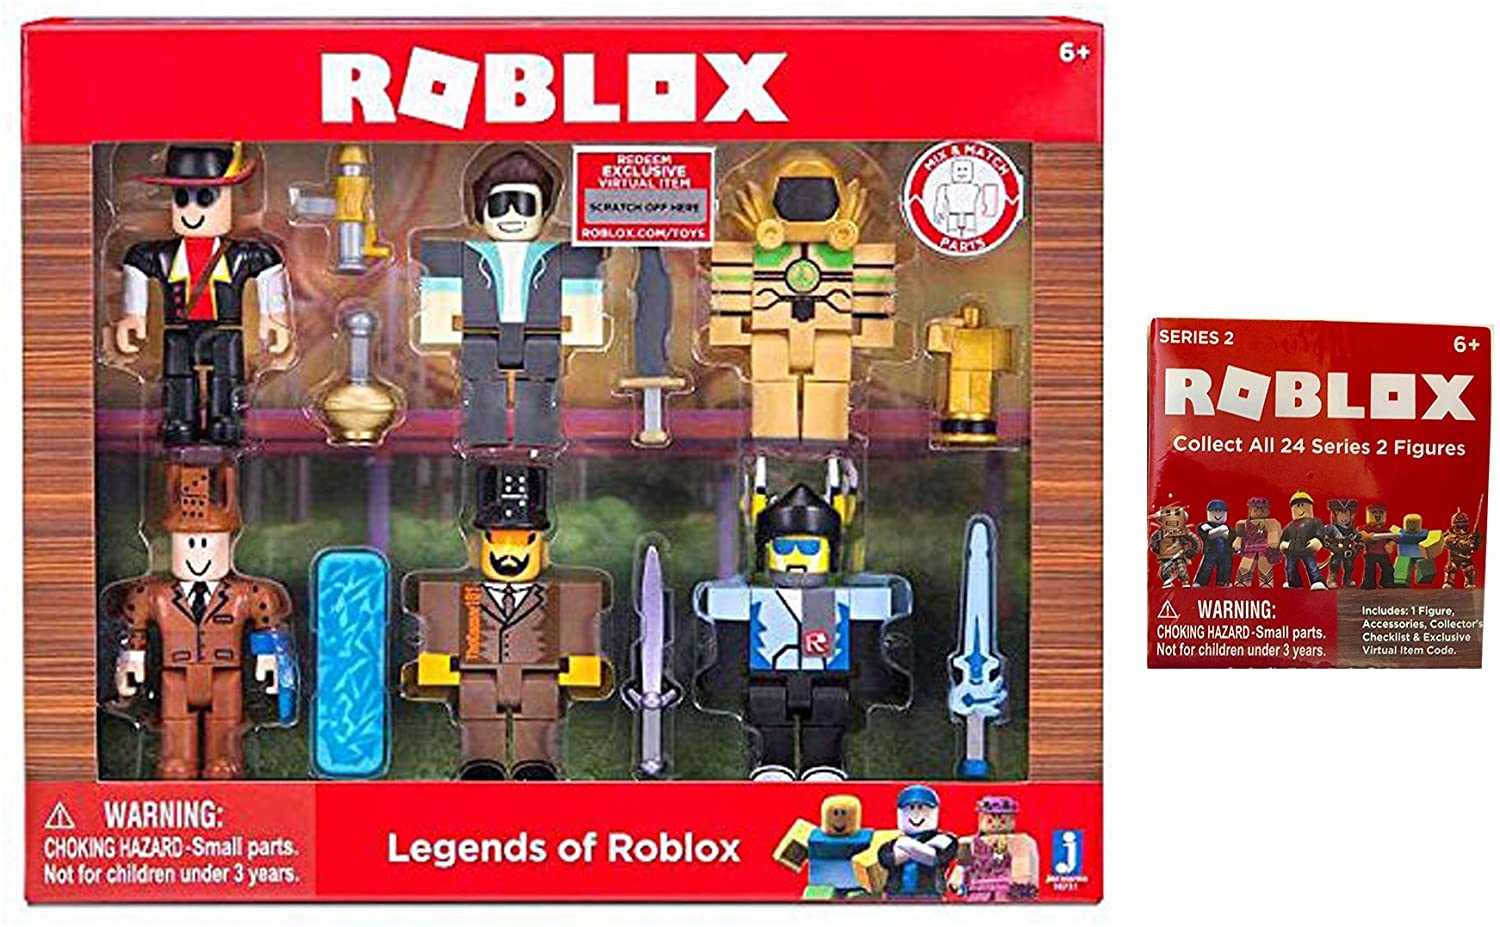 Roblox Toy Codes 2021 - 4 Ways to Get Working Codes